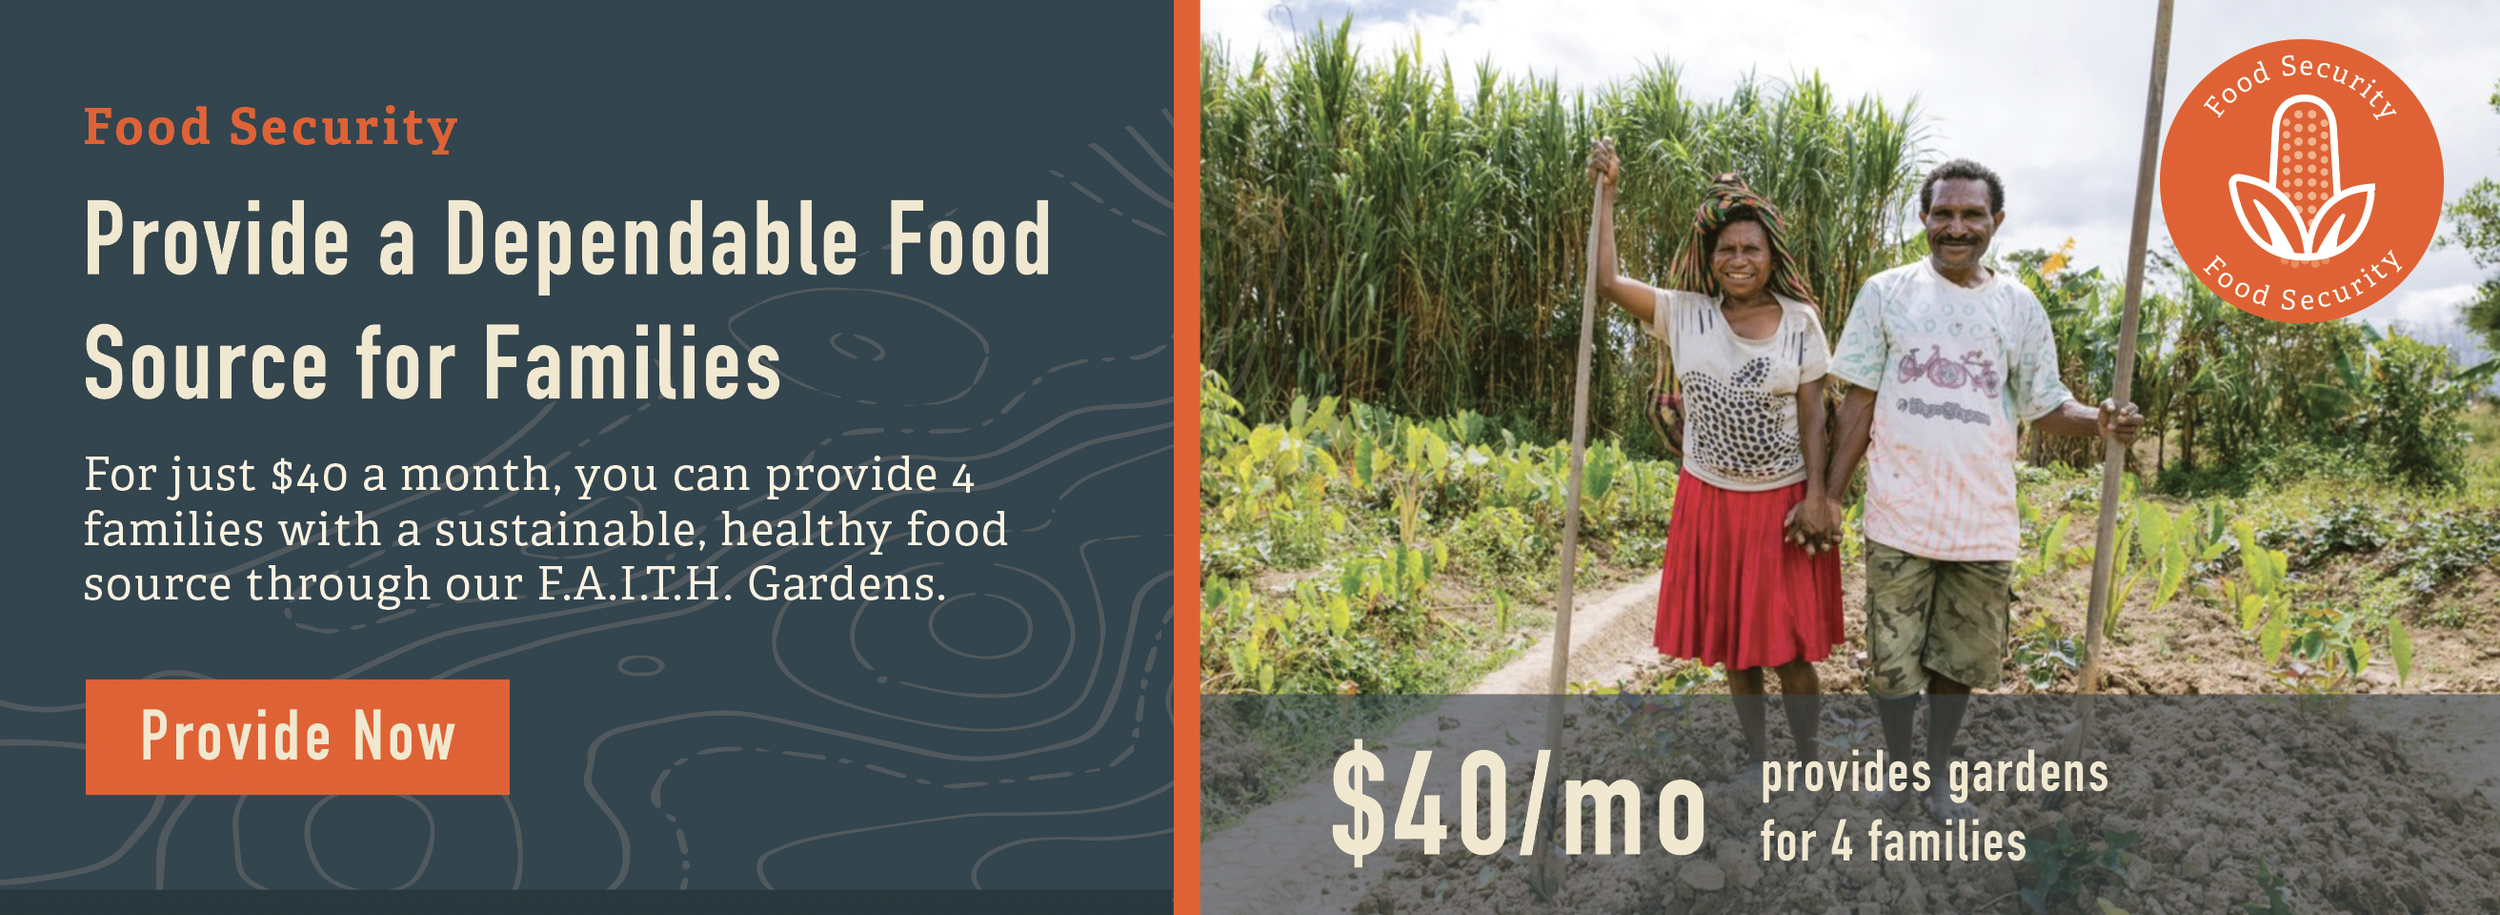 gardens dependable food source families villages